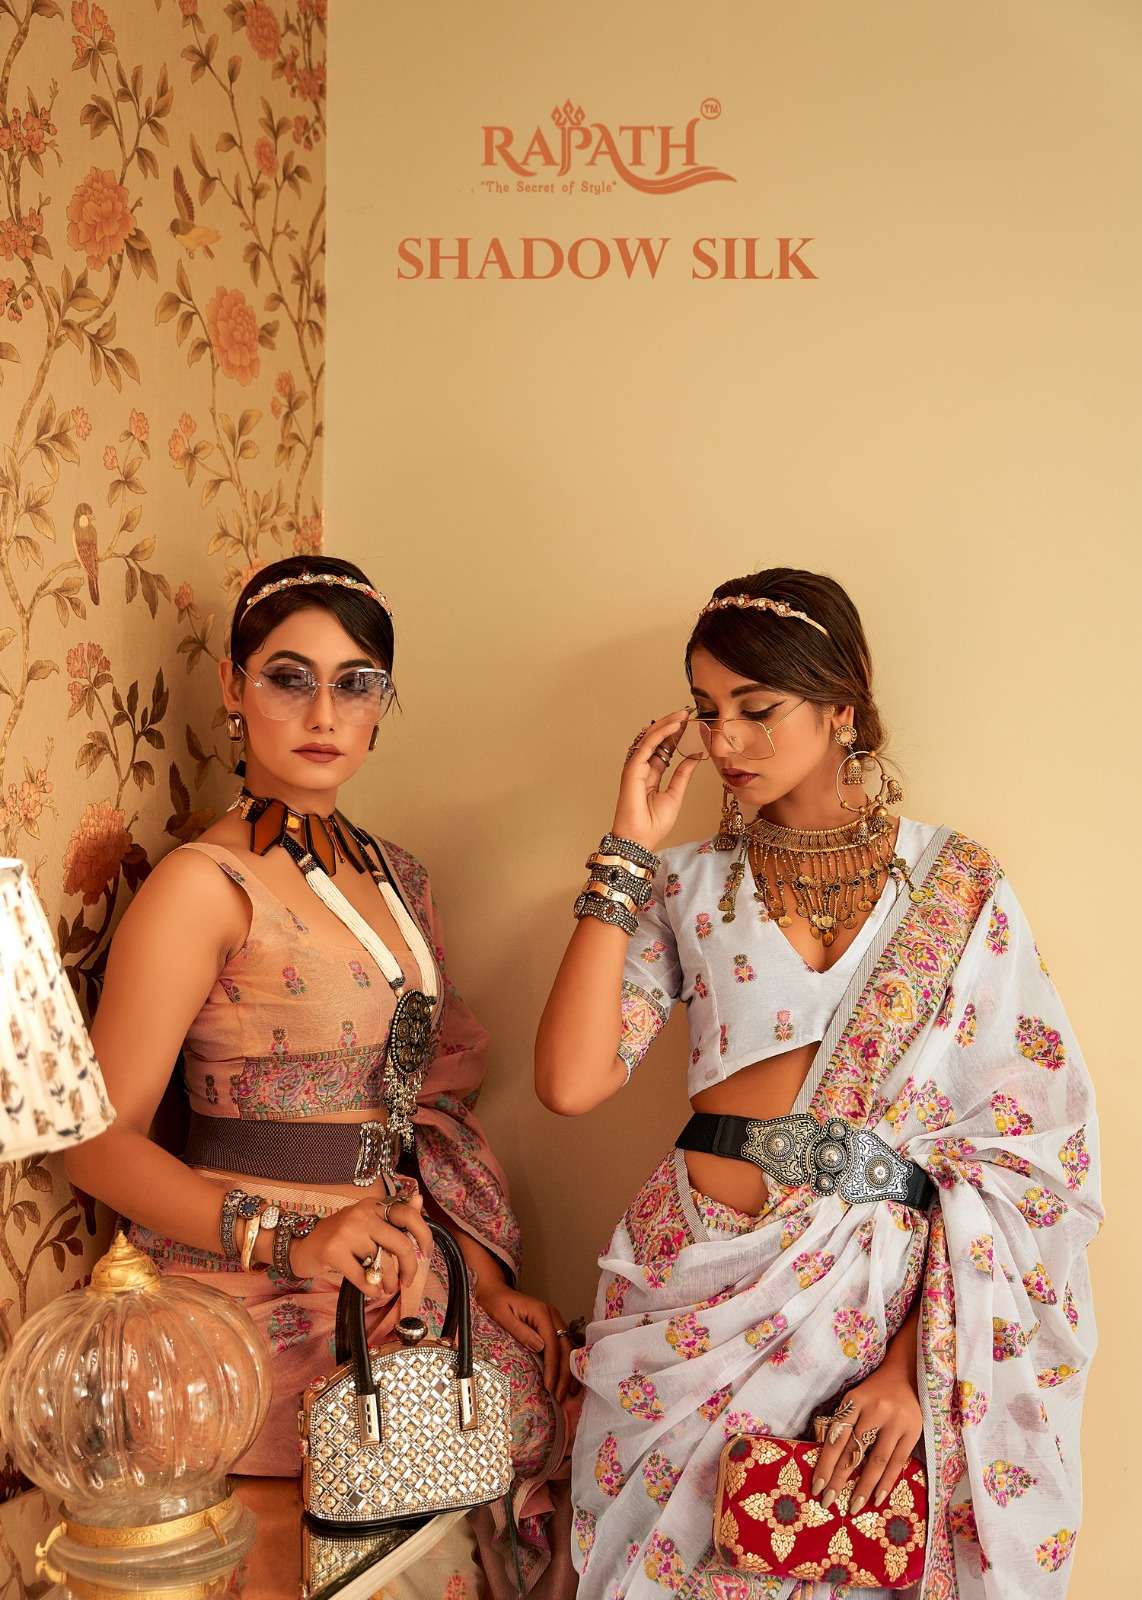 rajpath present shadow silk 153001-153006 amazing pashmina butta silk saree collection